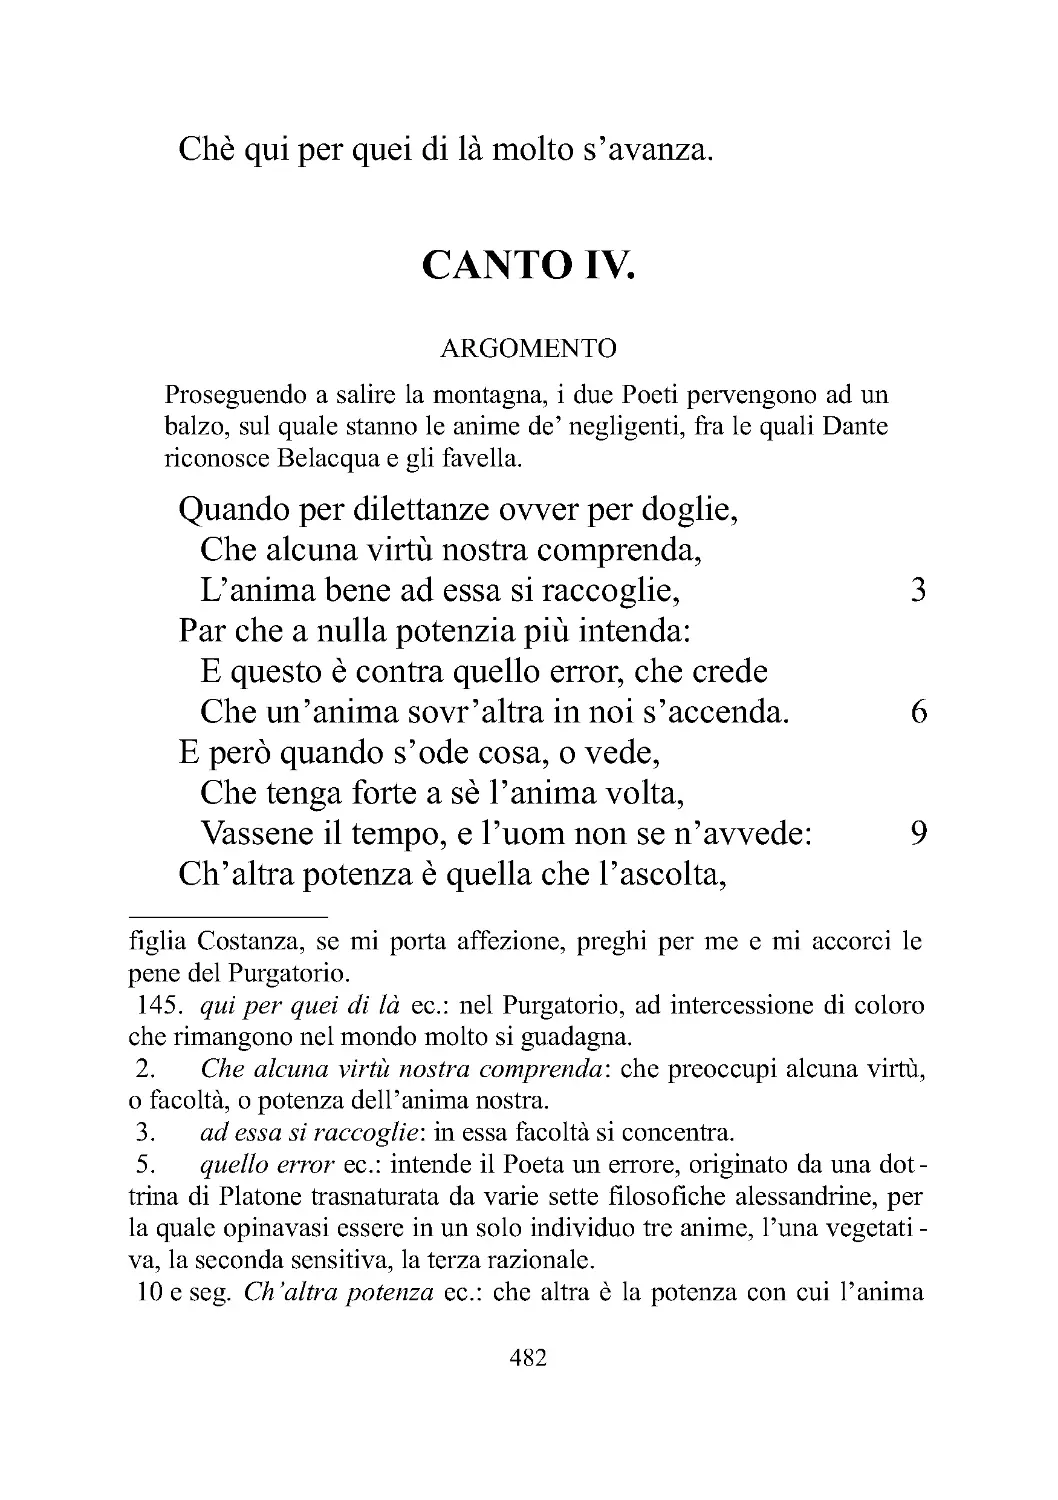 CANTO IV.